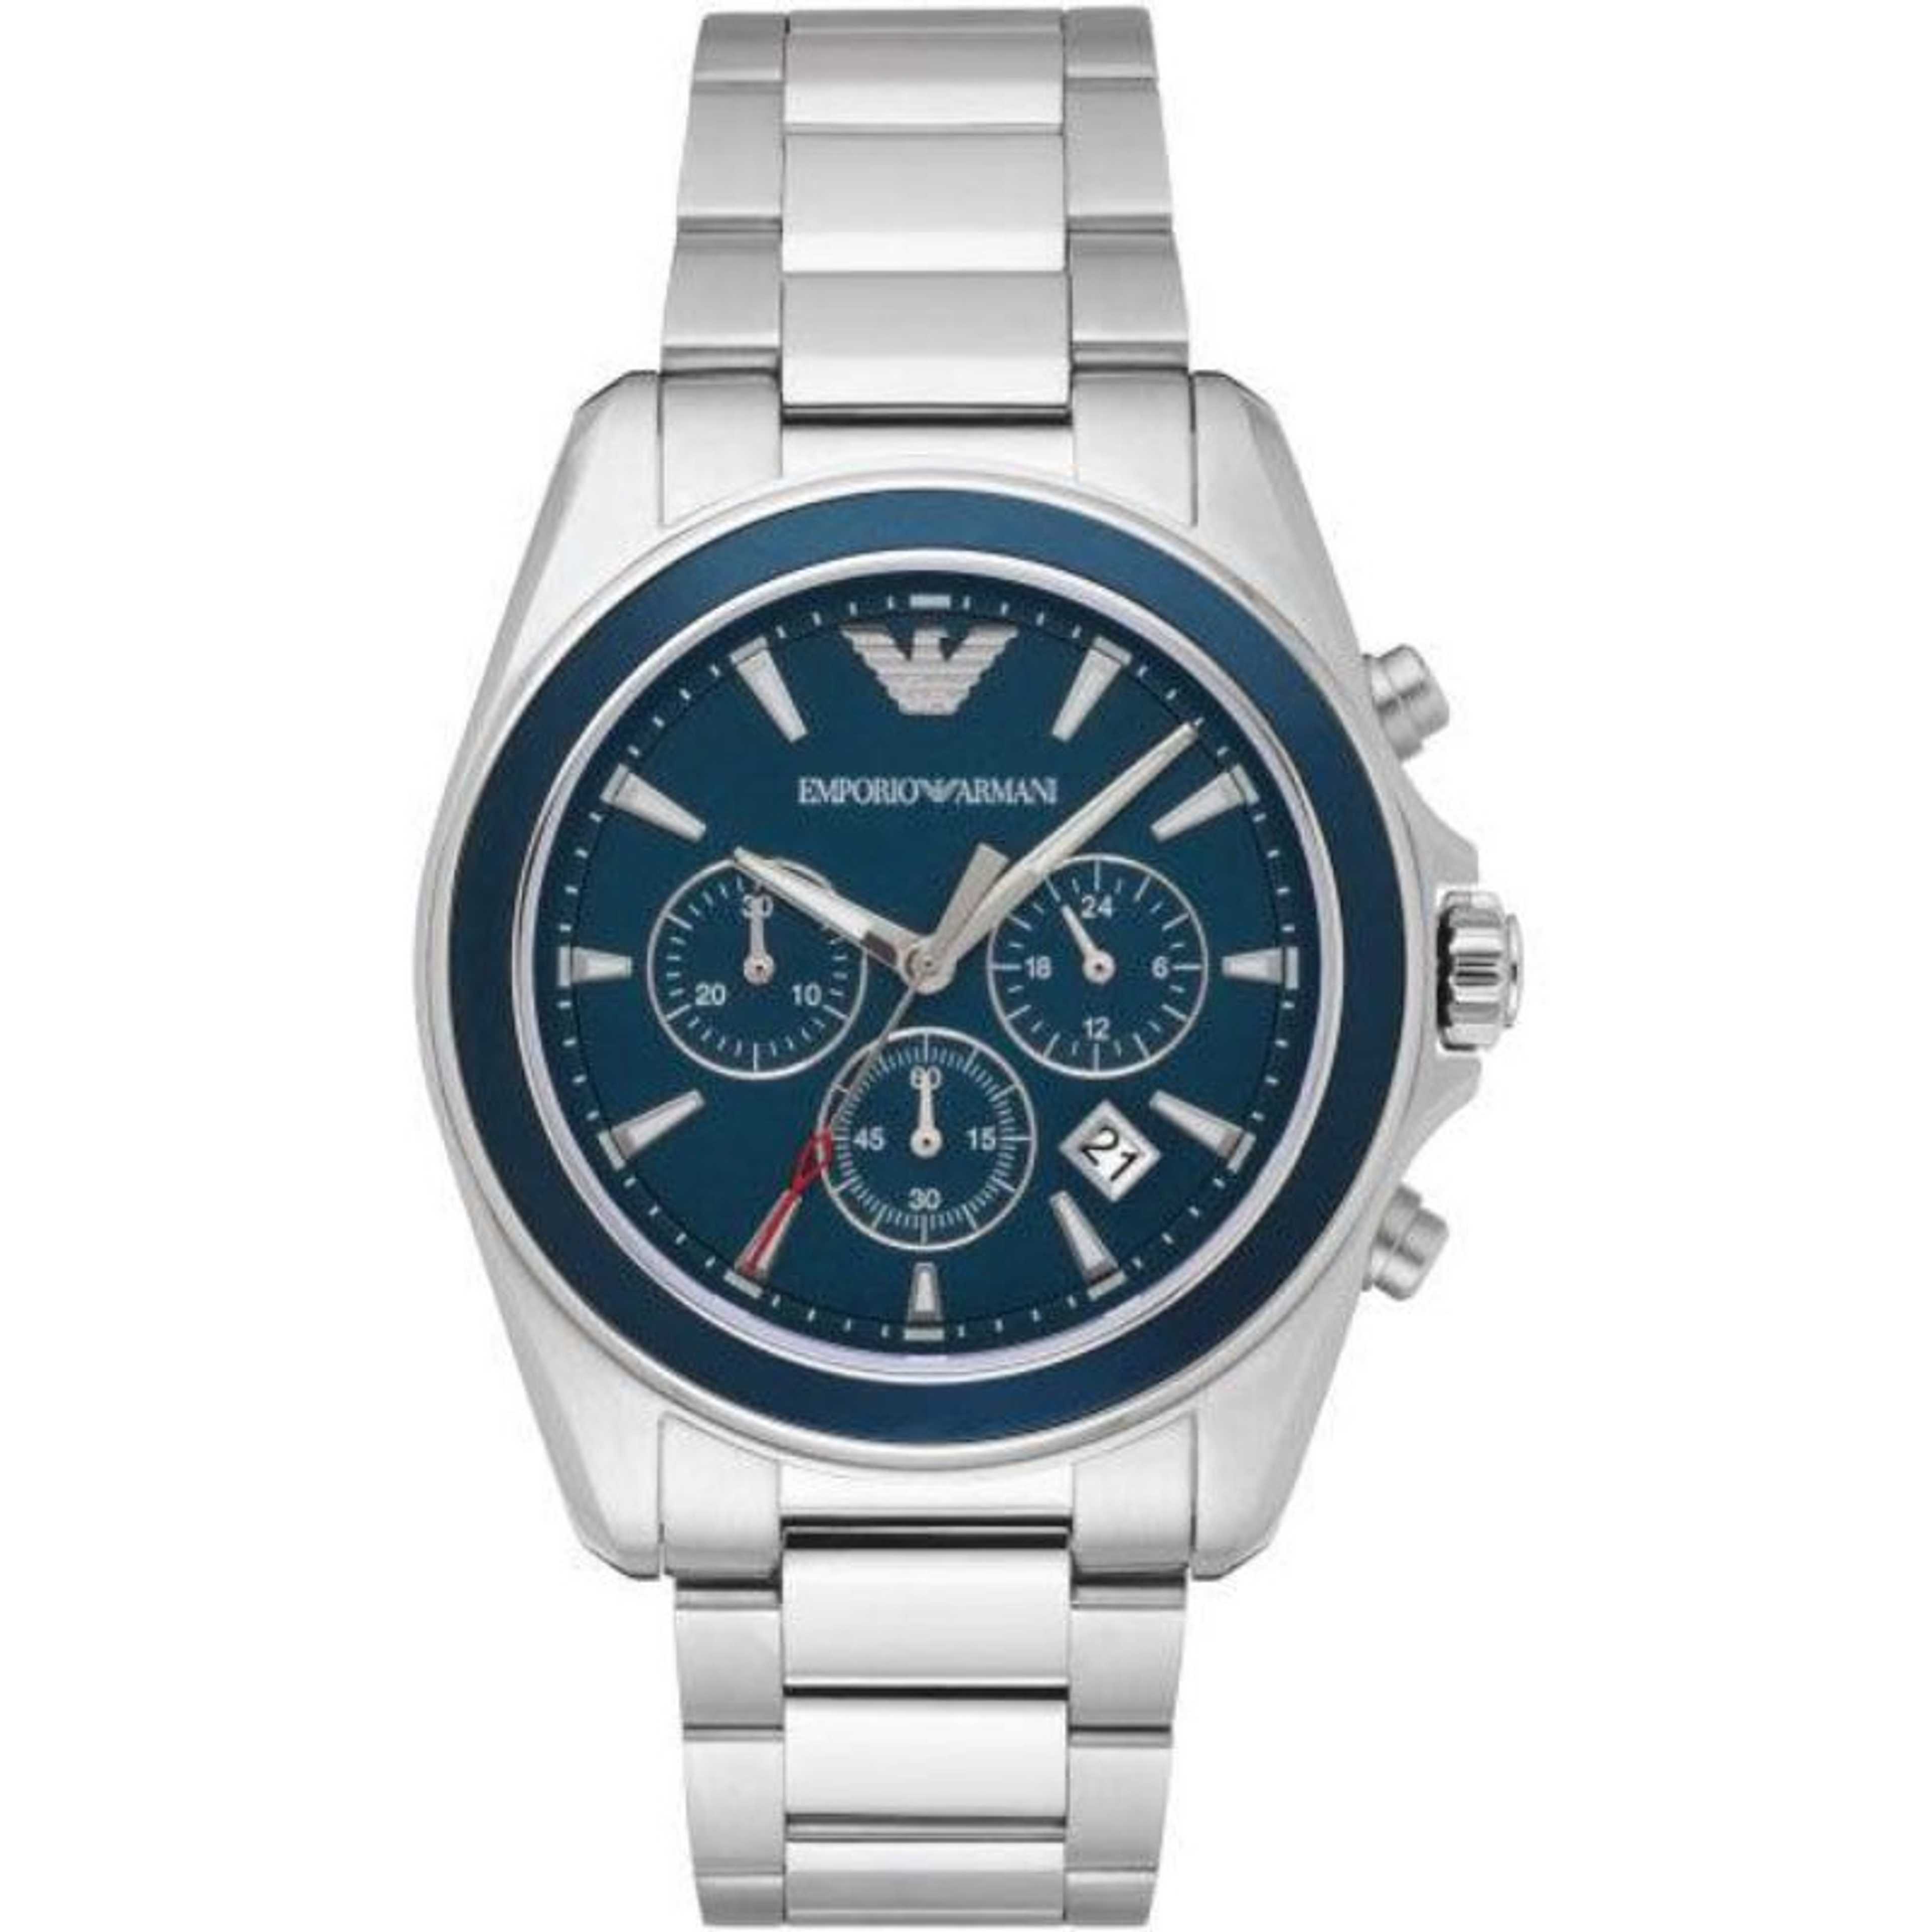 Emporio Armani Men's Chronograph Watch AR-6091